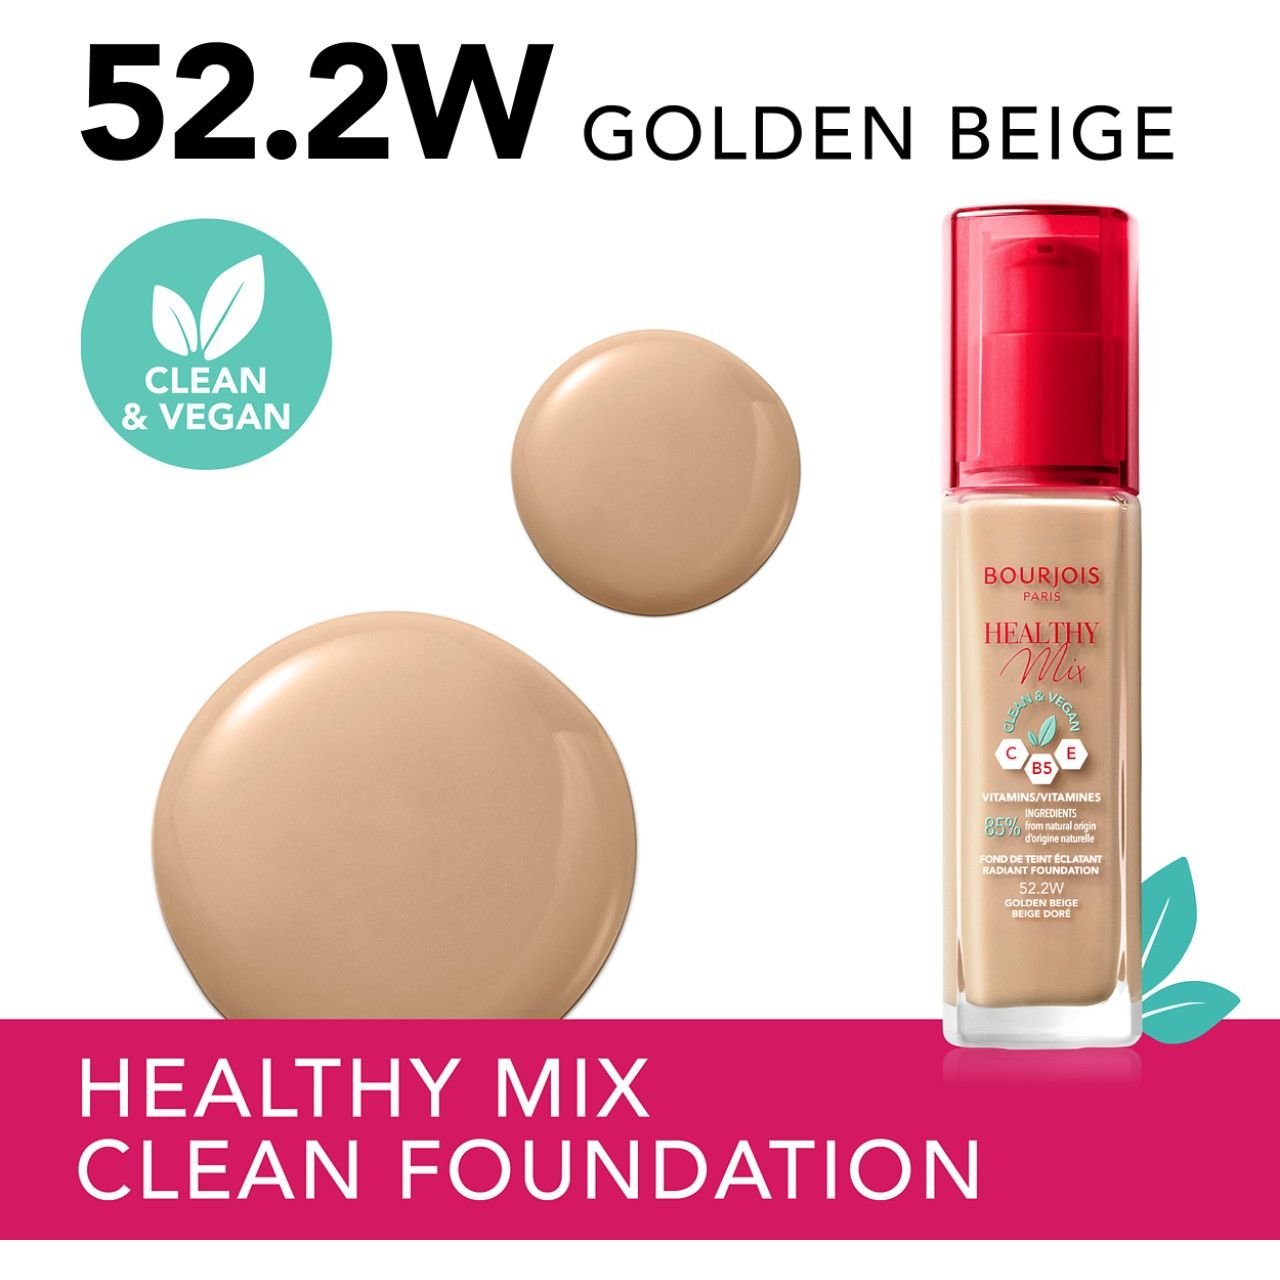 Тональная основа Bourjois Healthy Mix Clean & Vegan тон 52.2W (Golden Beige) 30 мл - фото 3